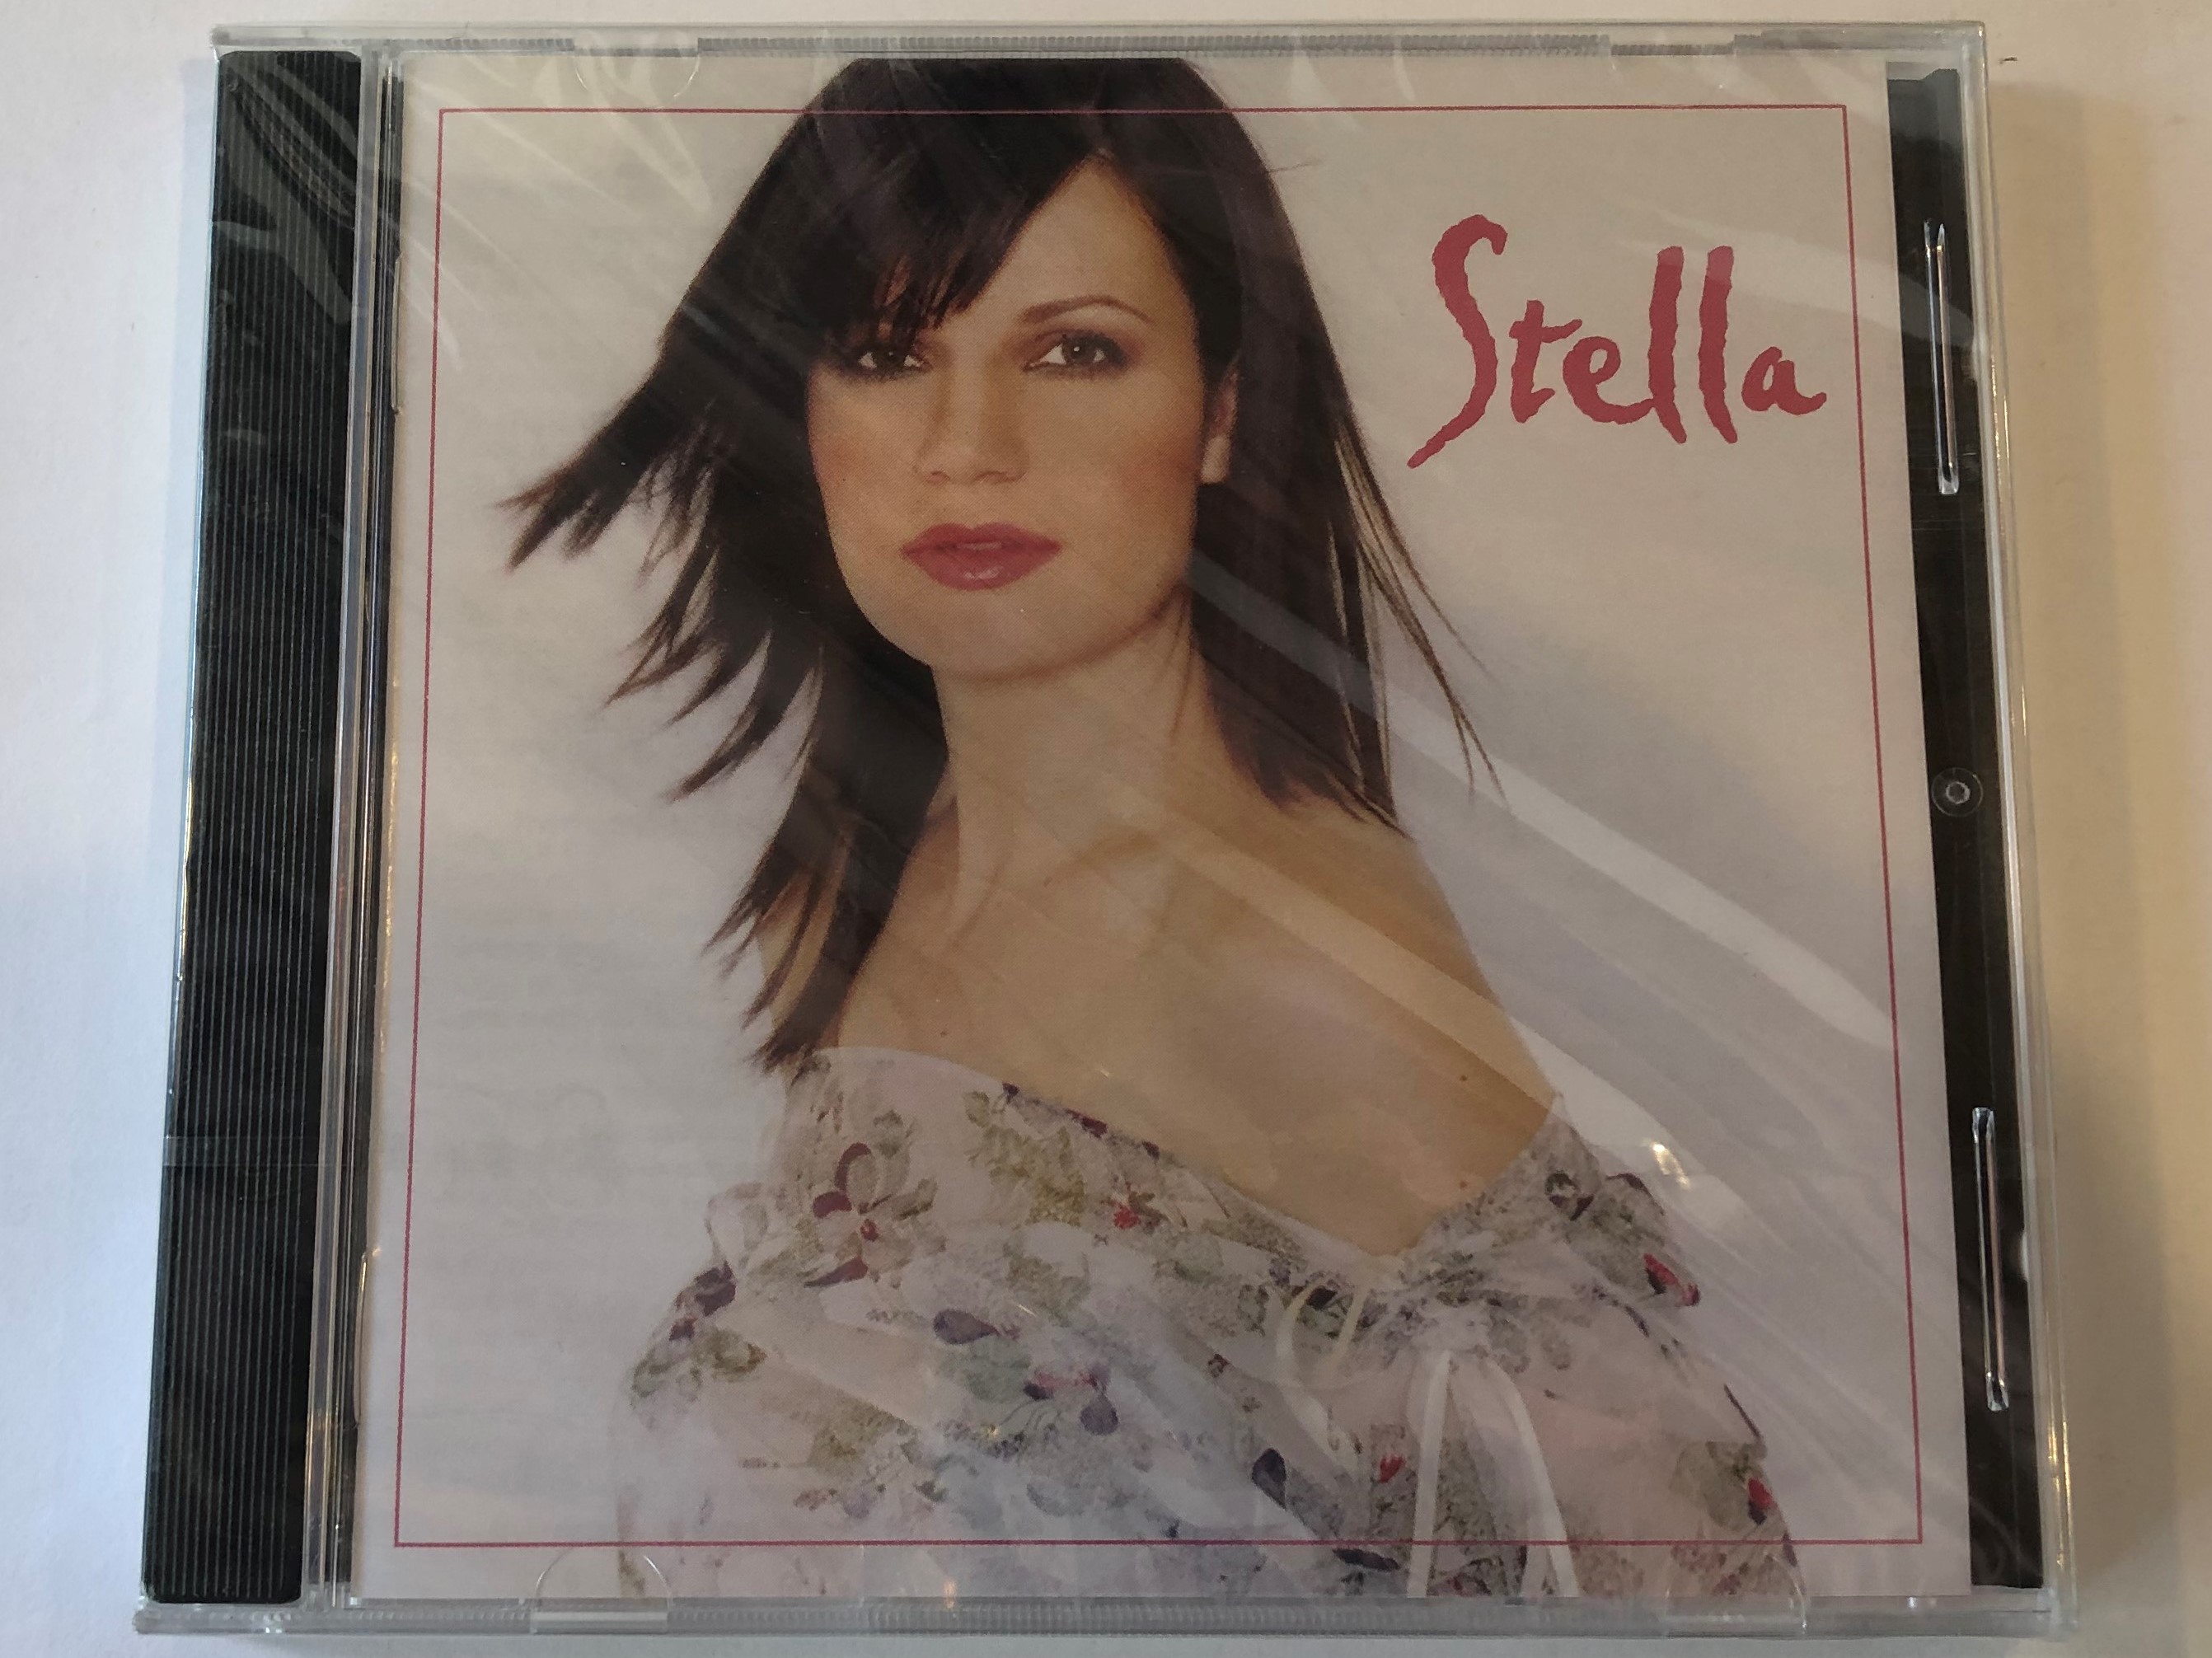 stella-d-b-group-audio-cd-2003-5999537740228-1-.jpg